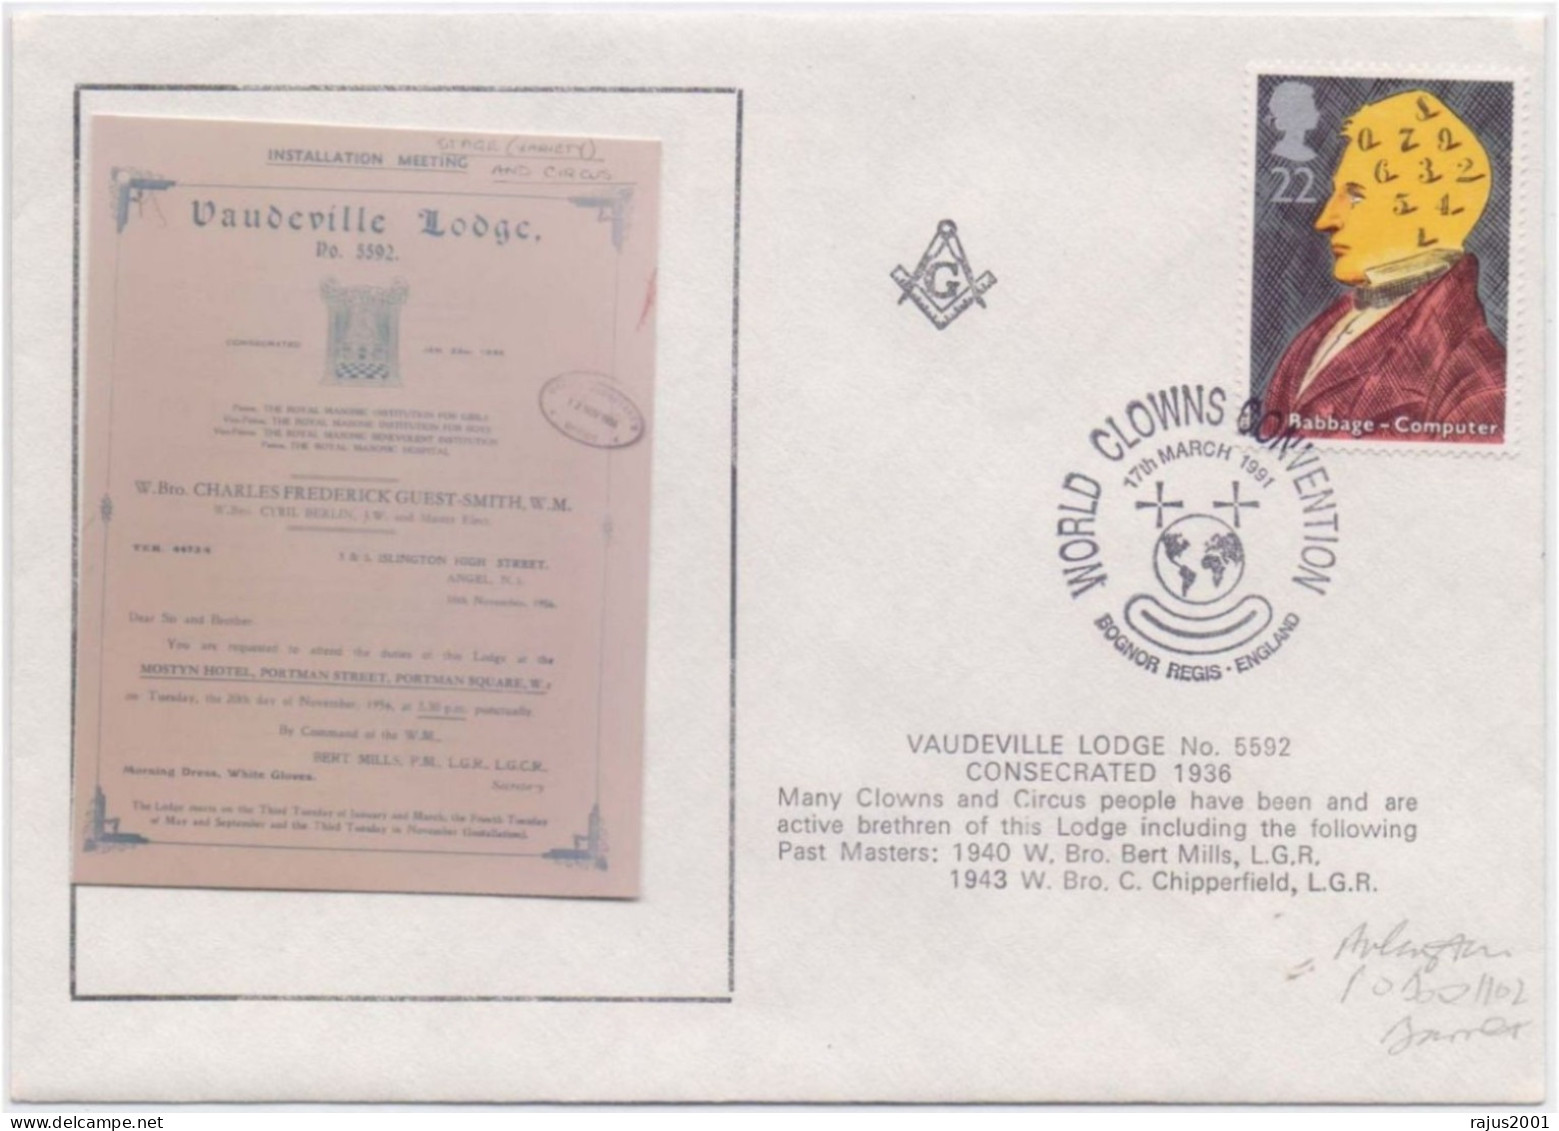 World Clowns Convention, Vaudeville Lodge No. 5592, Rabbage Computer, Freemasonry Masonic, Britain FDC 1991 - Freemasonry